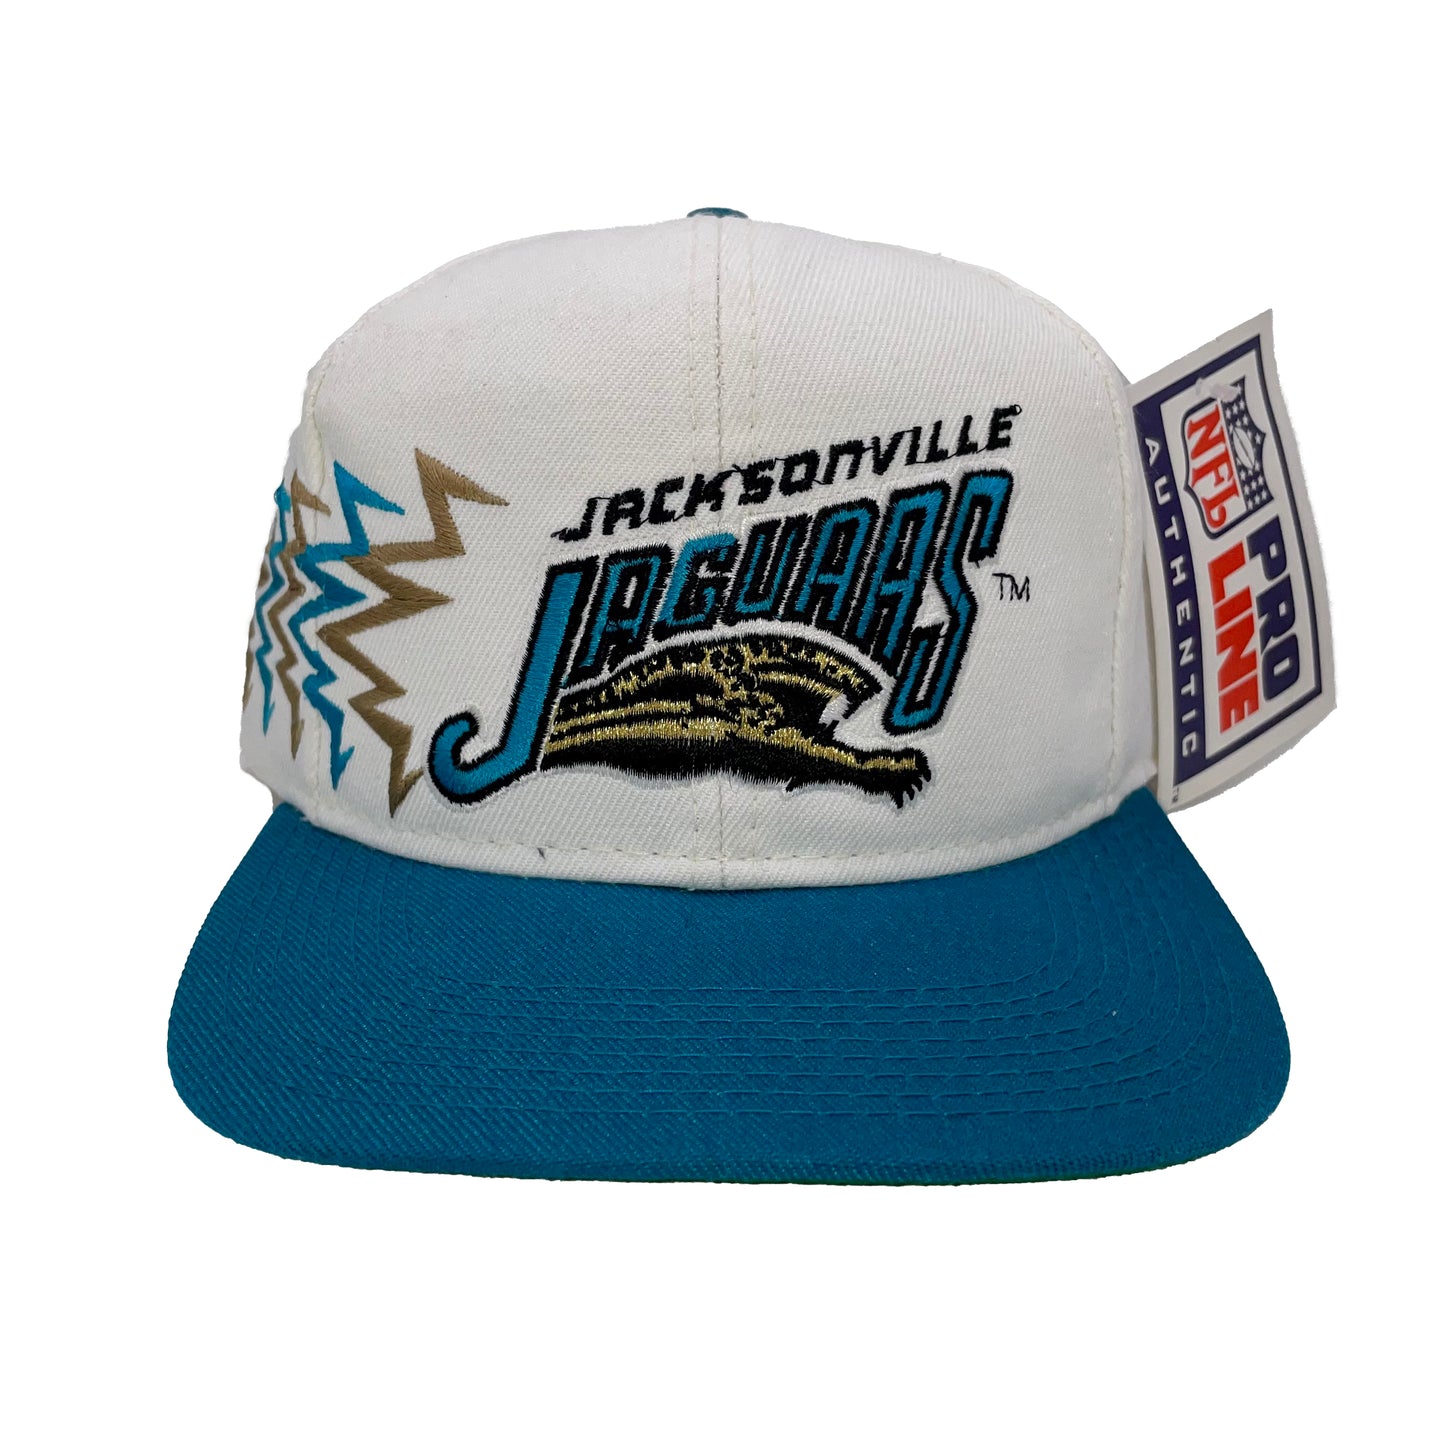 Vintage Jacksonville Jaguars DEADSTOCK SPORTS SPECIALTIES banned logo hat